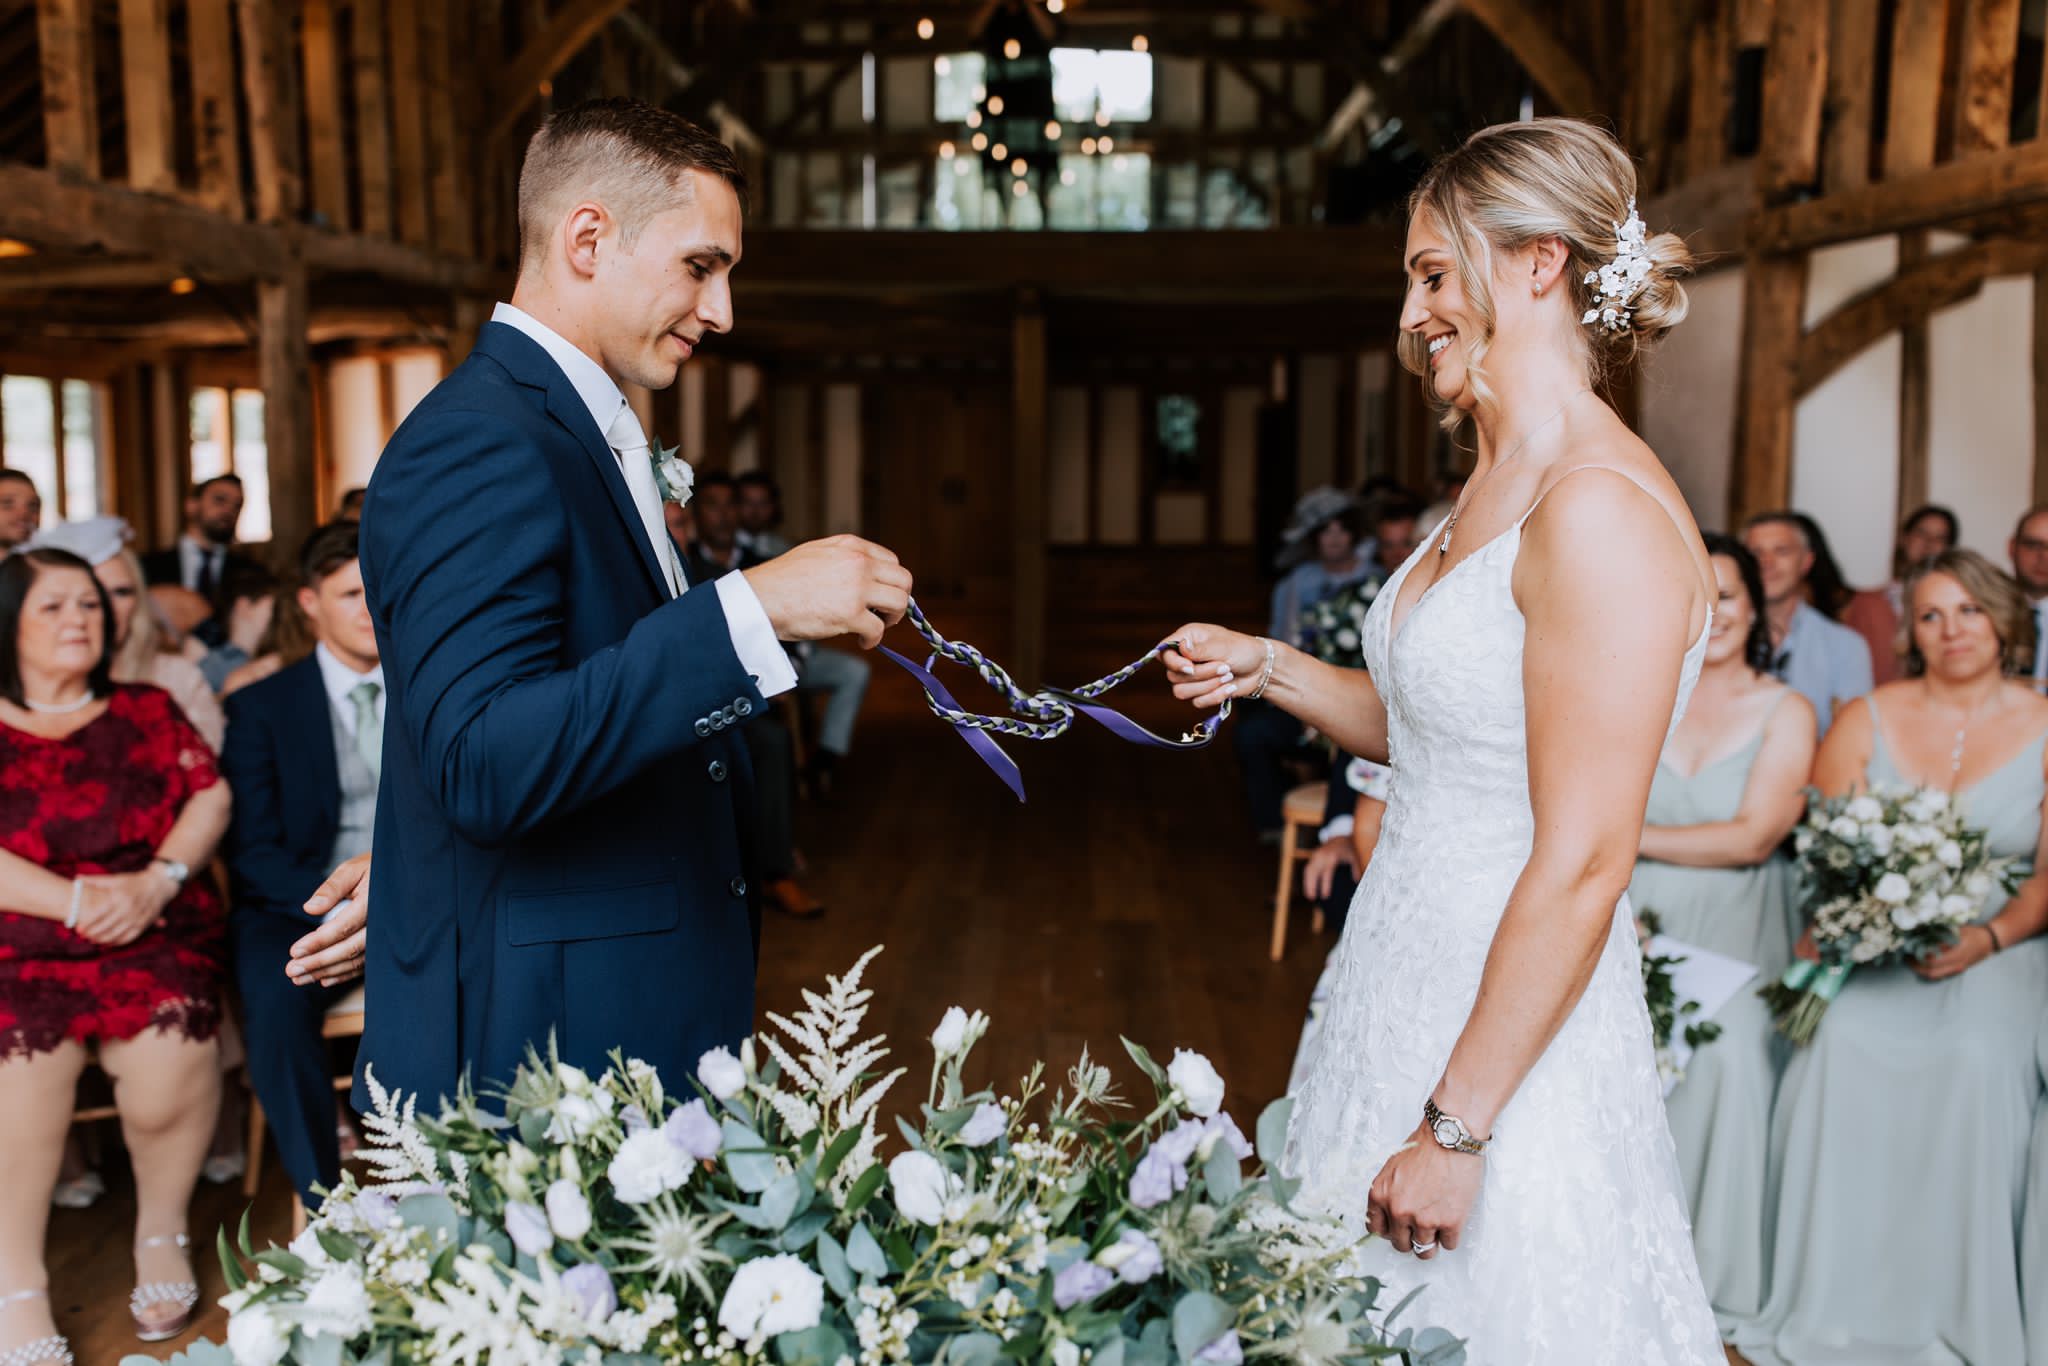 Karen Irving Celebrant on Tie The knot Wedding Directory